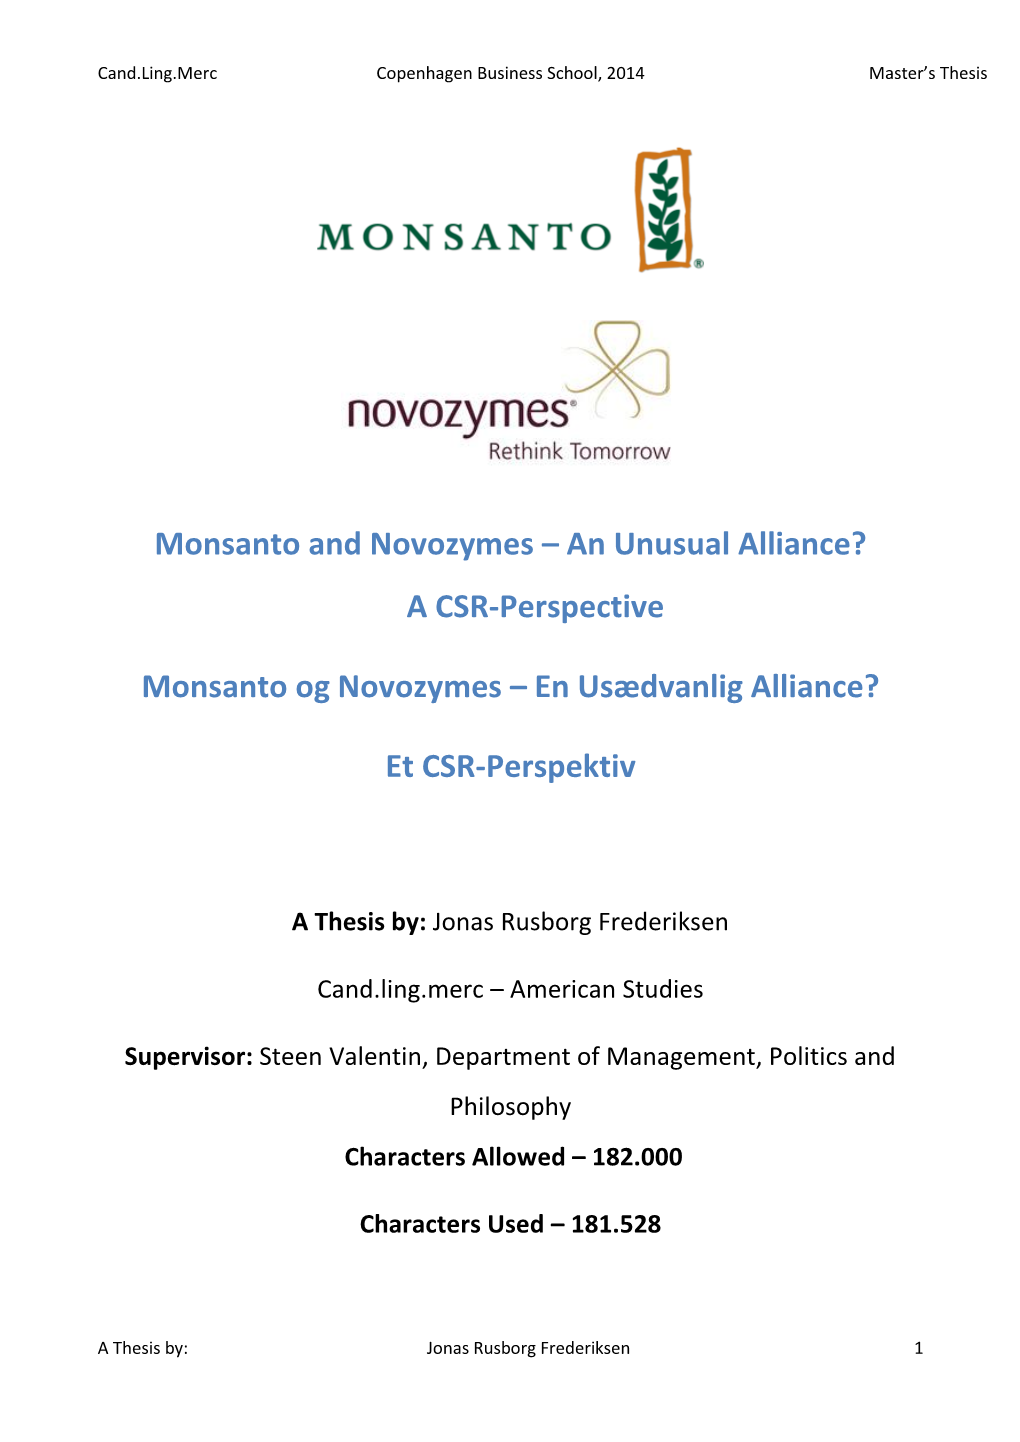 A CSR-Perspective Monsanto Og Novozymes